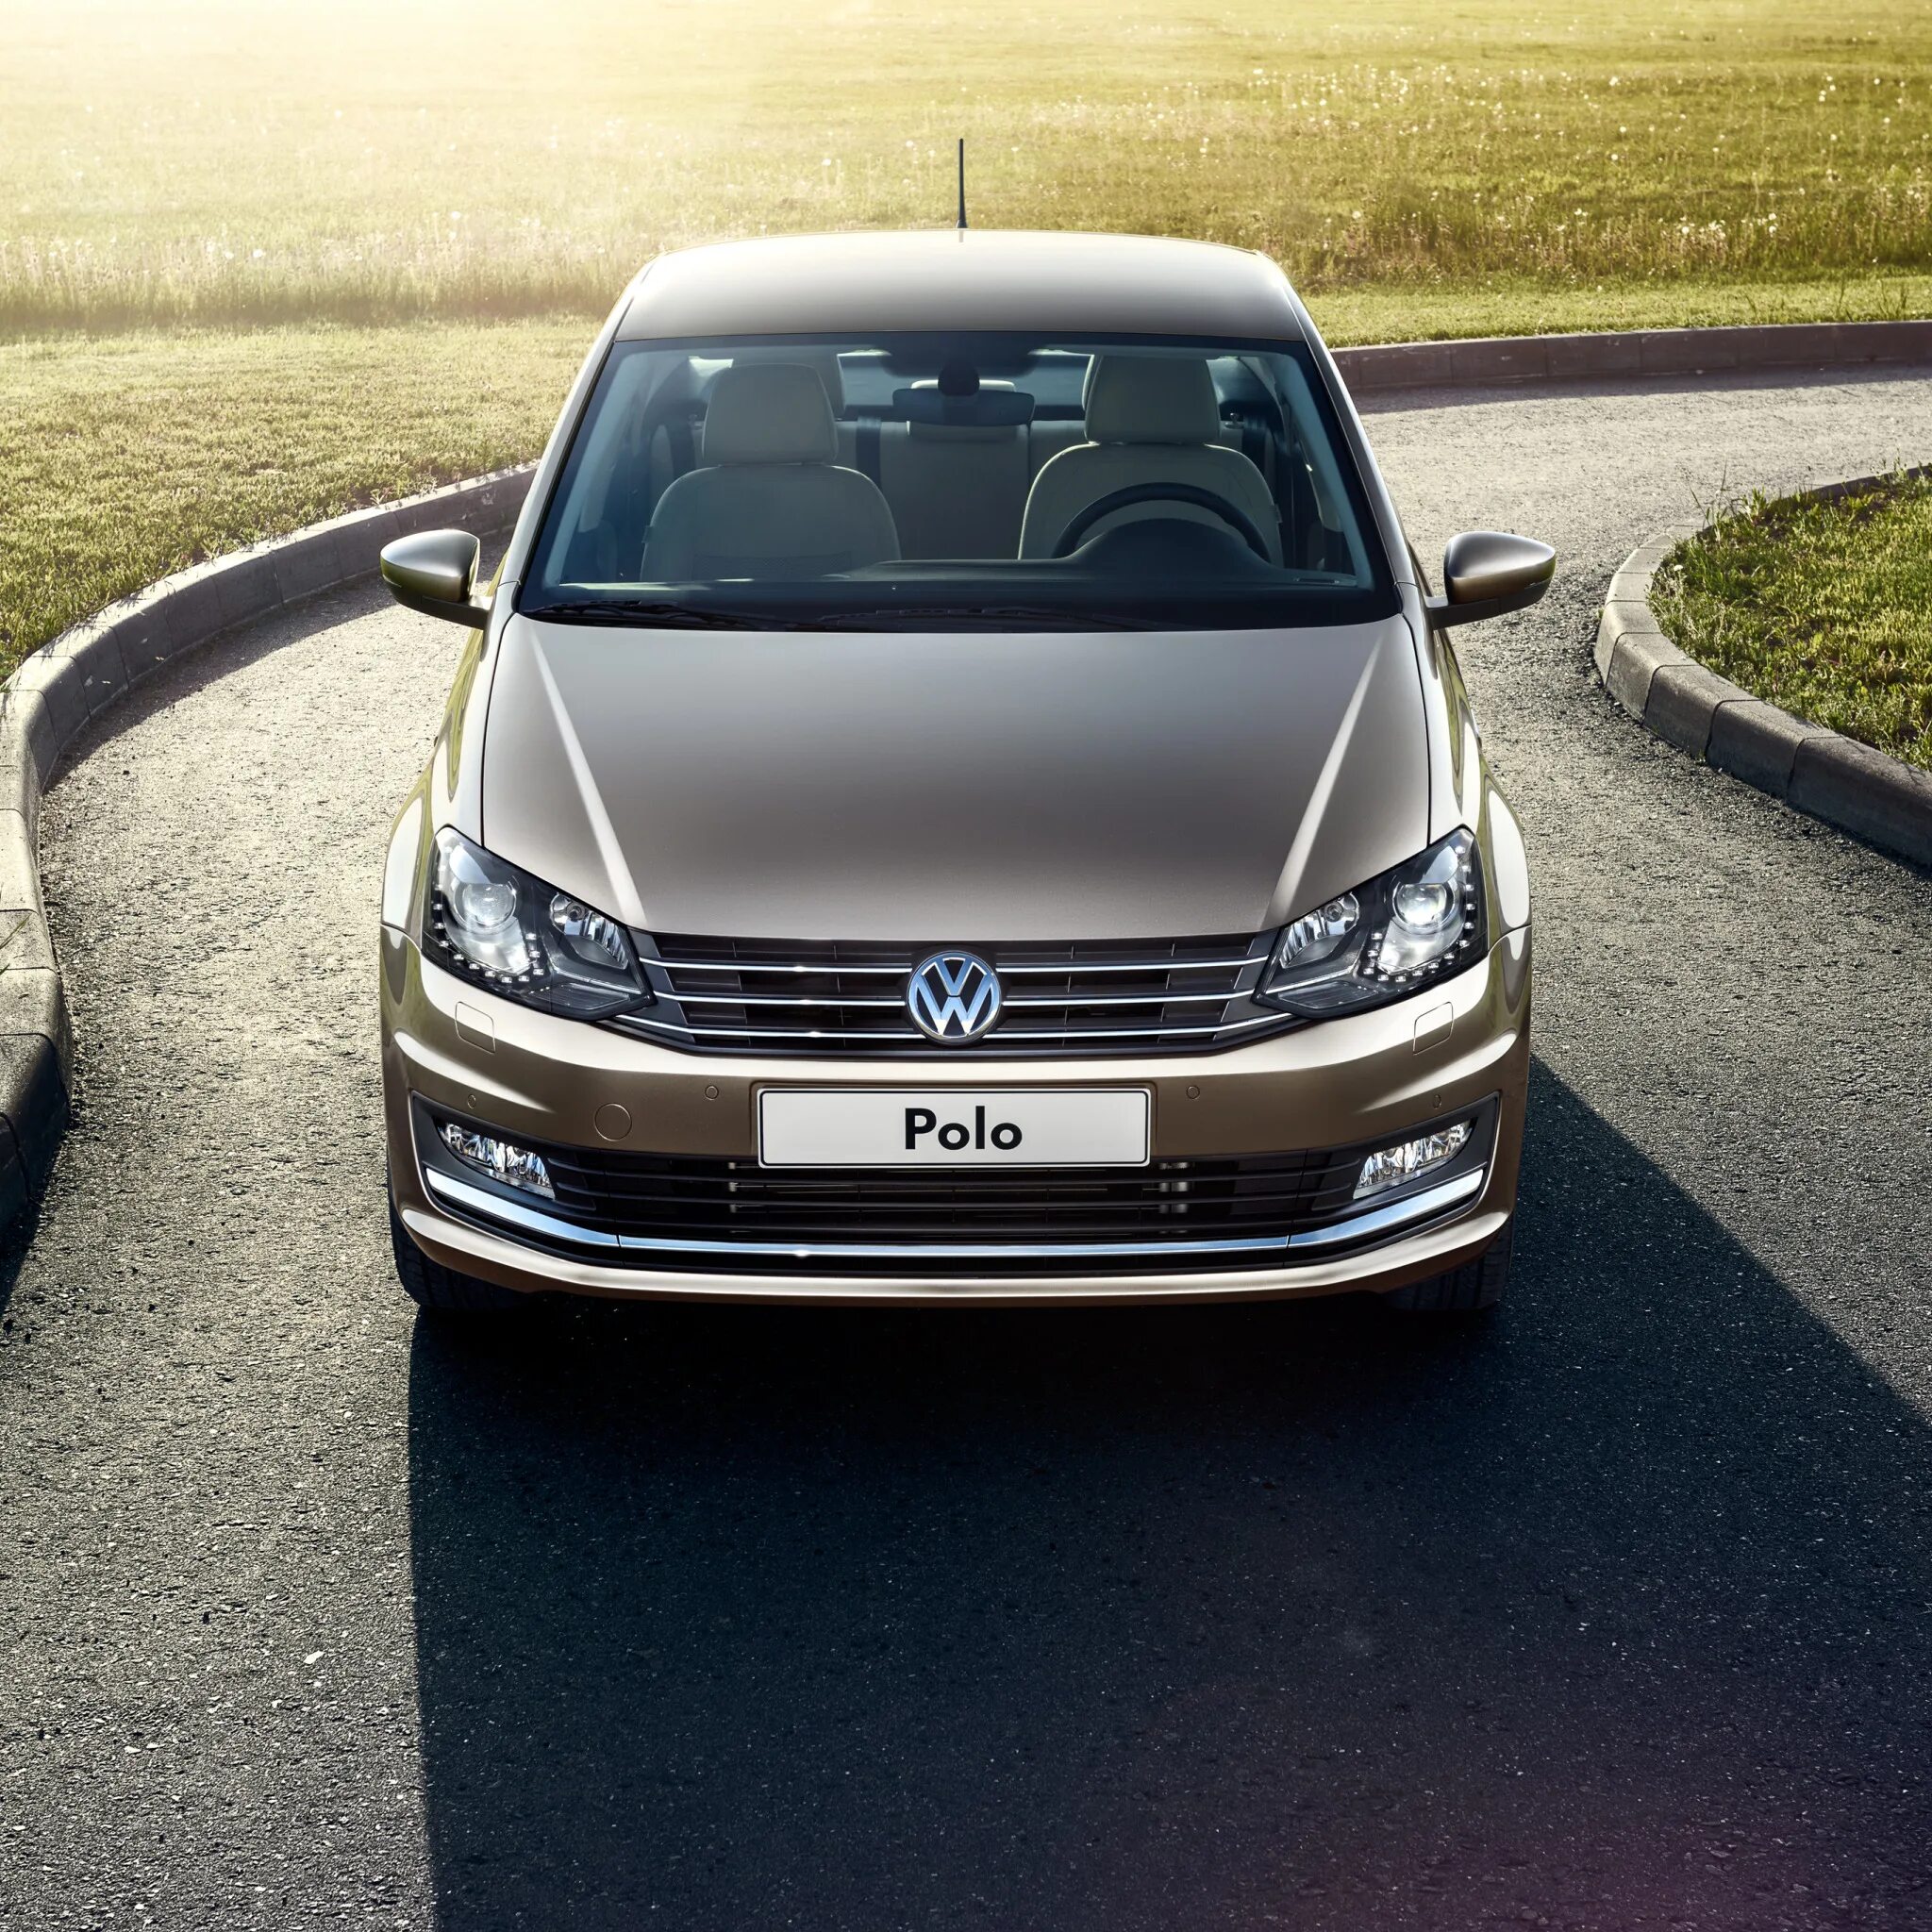 Volkswagen где купить. Volkswagen Polo sedan 2015. Поло седан 2015. Polo 2015 седан. 1.6 Л. 5мкп (110 л.с) FWD.